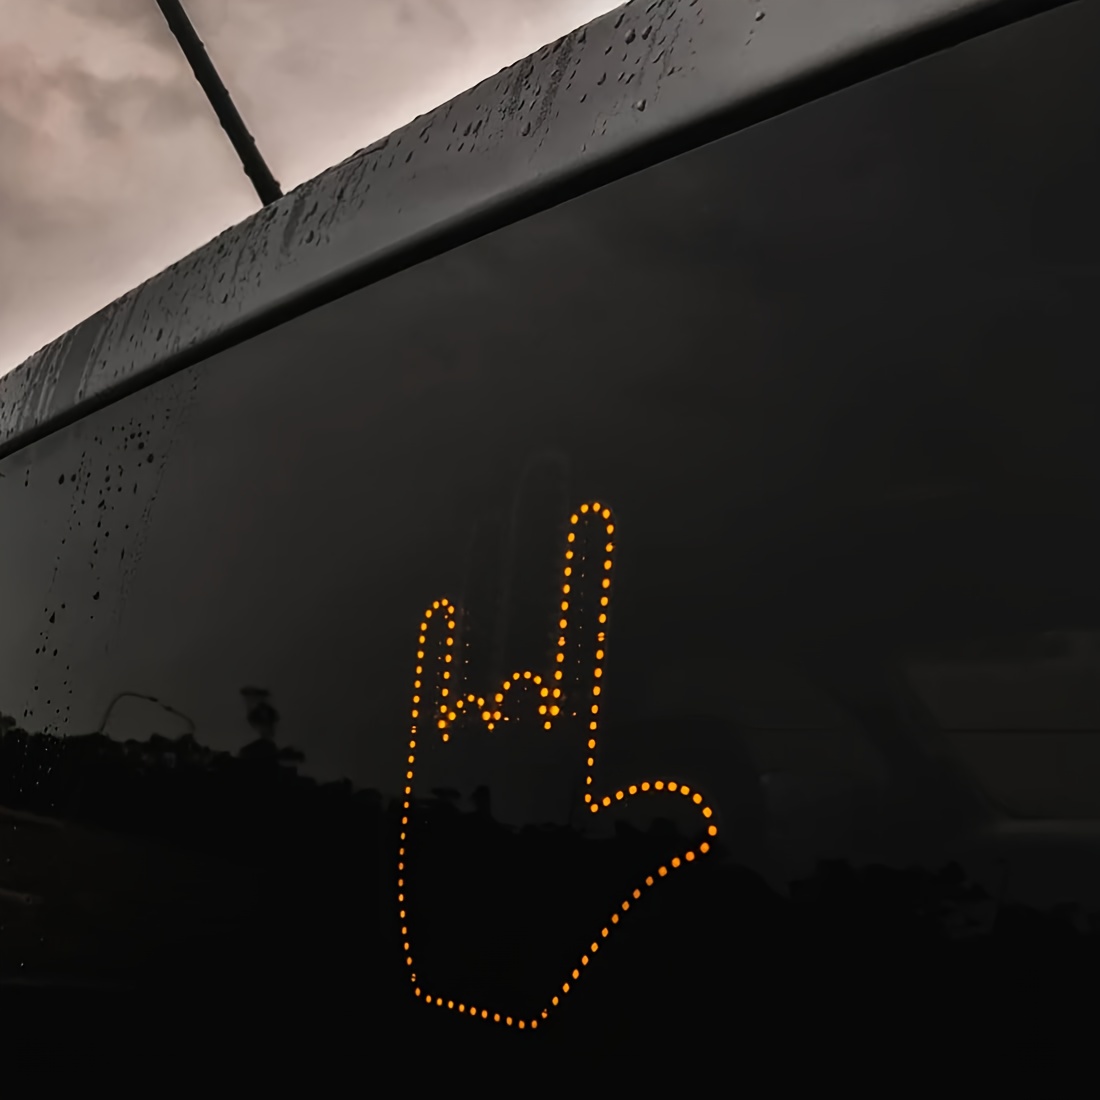  Skywin Hand Gesture Car Light Vehicle Accessories